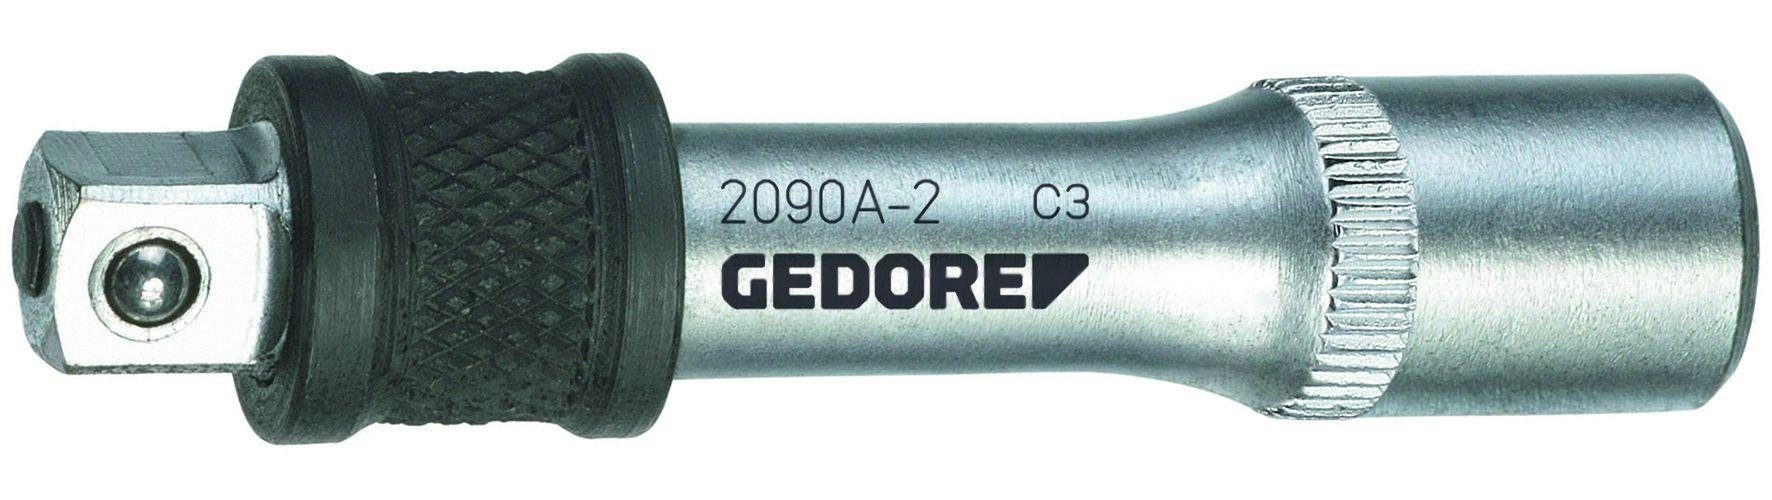 Gedore Ratschenringschlüssel 2090 A-2 Verlängerung mit Auslöser 1/4" 55 mm